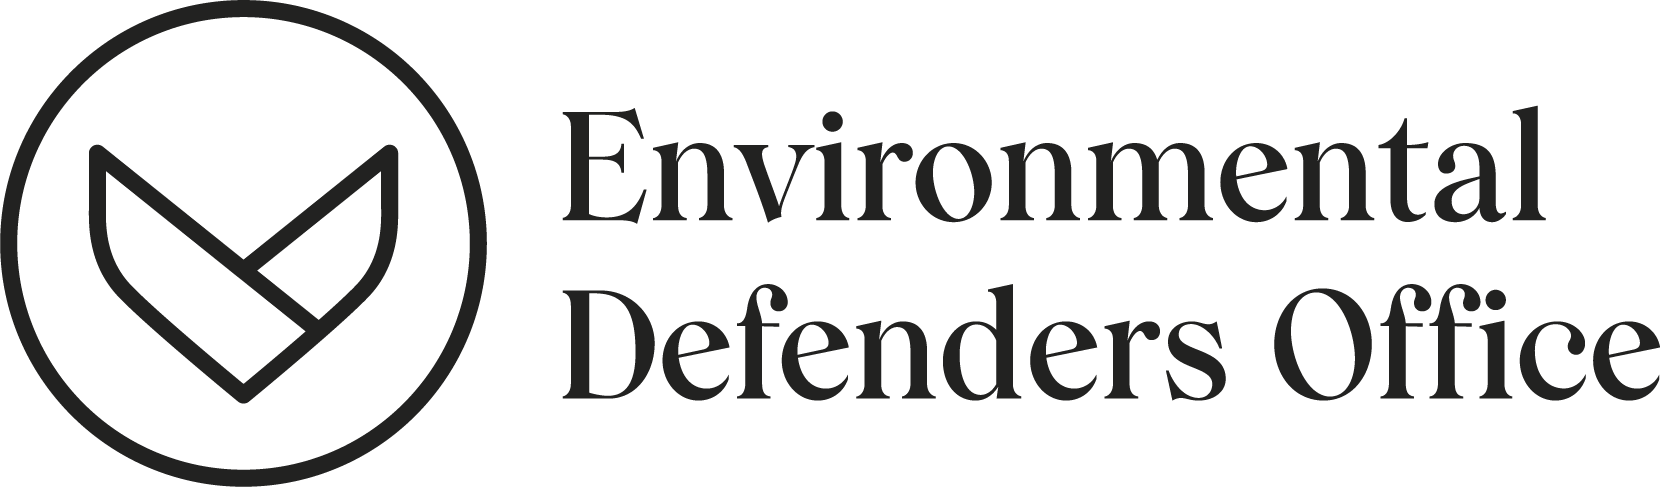 Environmental Defender’s Office